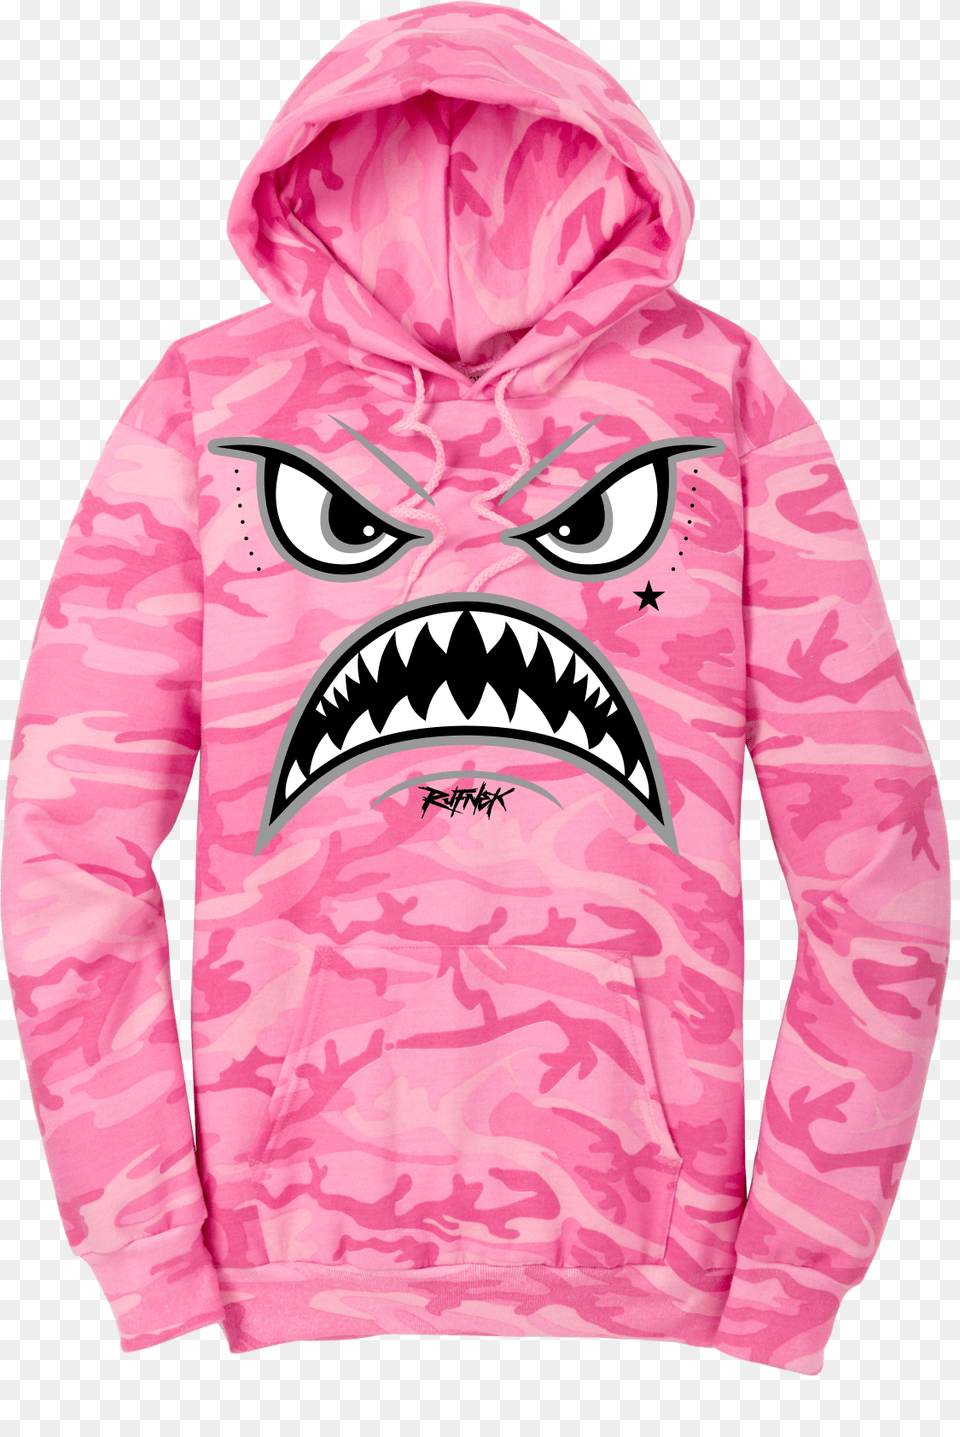 Rufnek Pink Warface Camo Hoodie Baws Clothing Jacket, Sweatshirt, Sweater, Knitwear, Hood Free Png